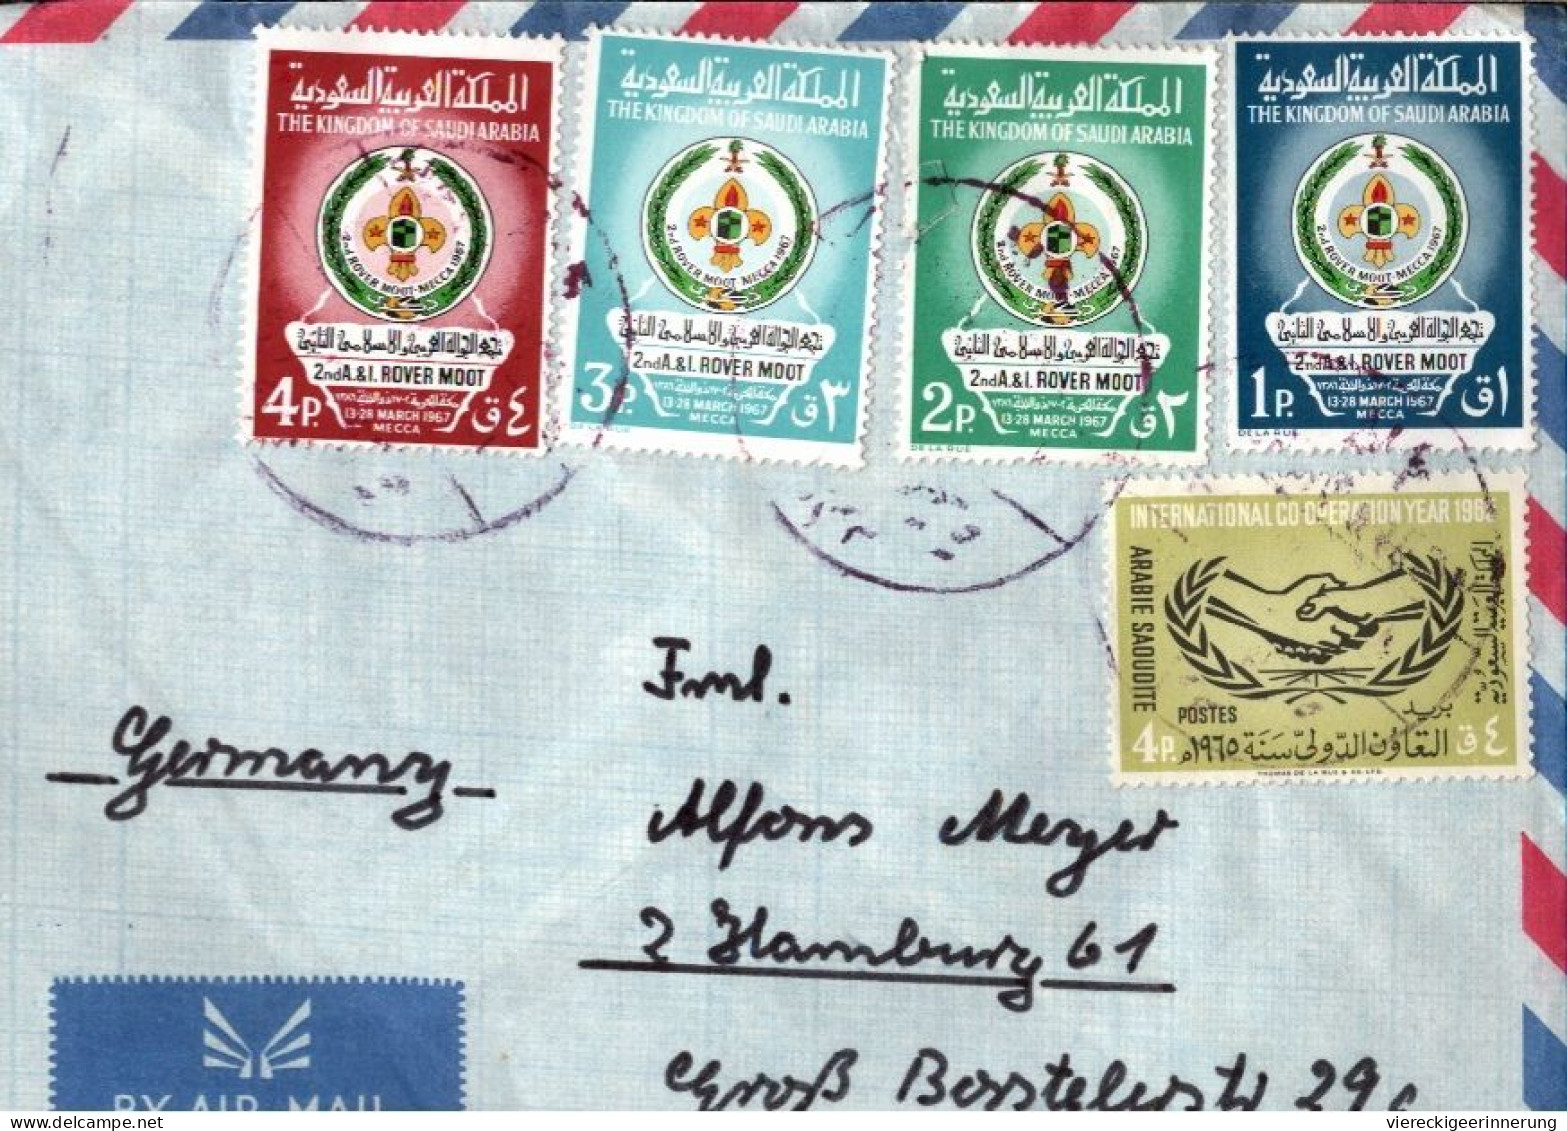 ! Luftpostbrief, Airmail Cover, 1967 Aus Jeddah, Saudi Arabia, Boyscout Stamps - Saudi-Arabien